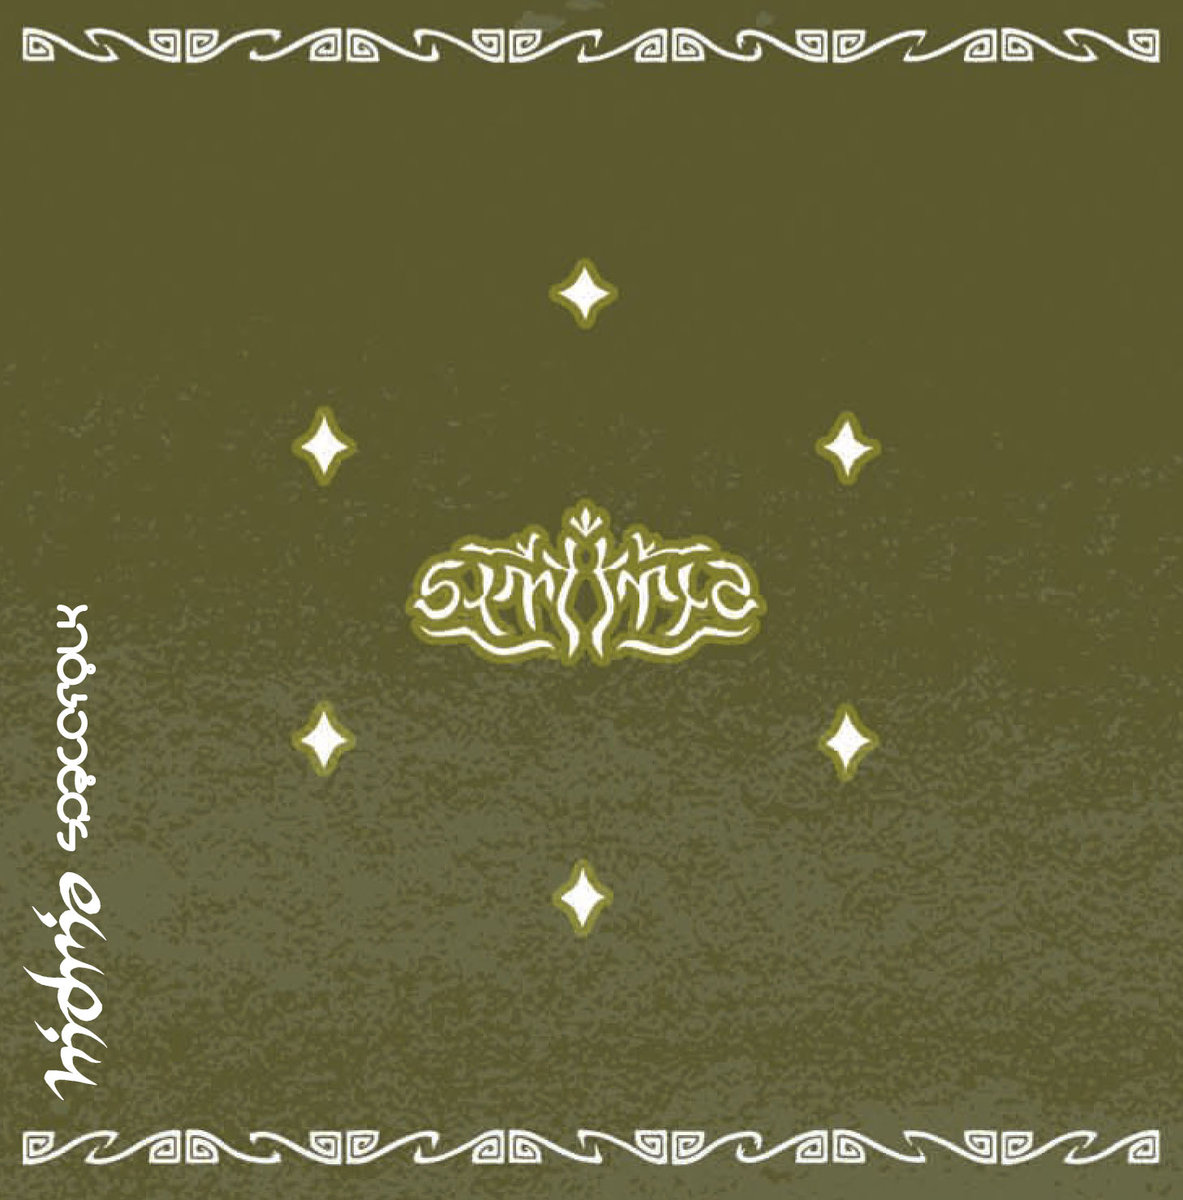 Hidria Spacefolk - 322 @ 'Symetria' album (alternative, astrobeat)